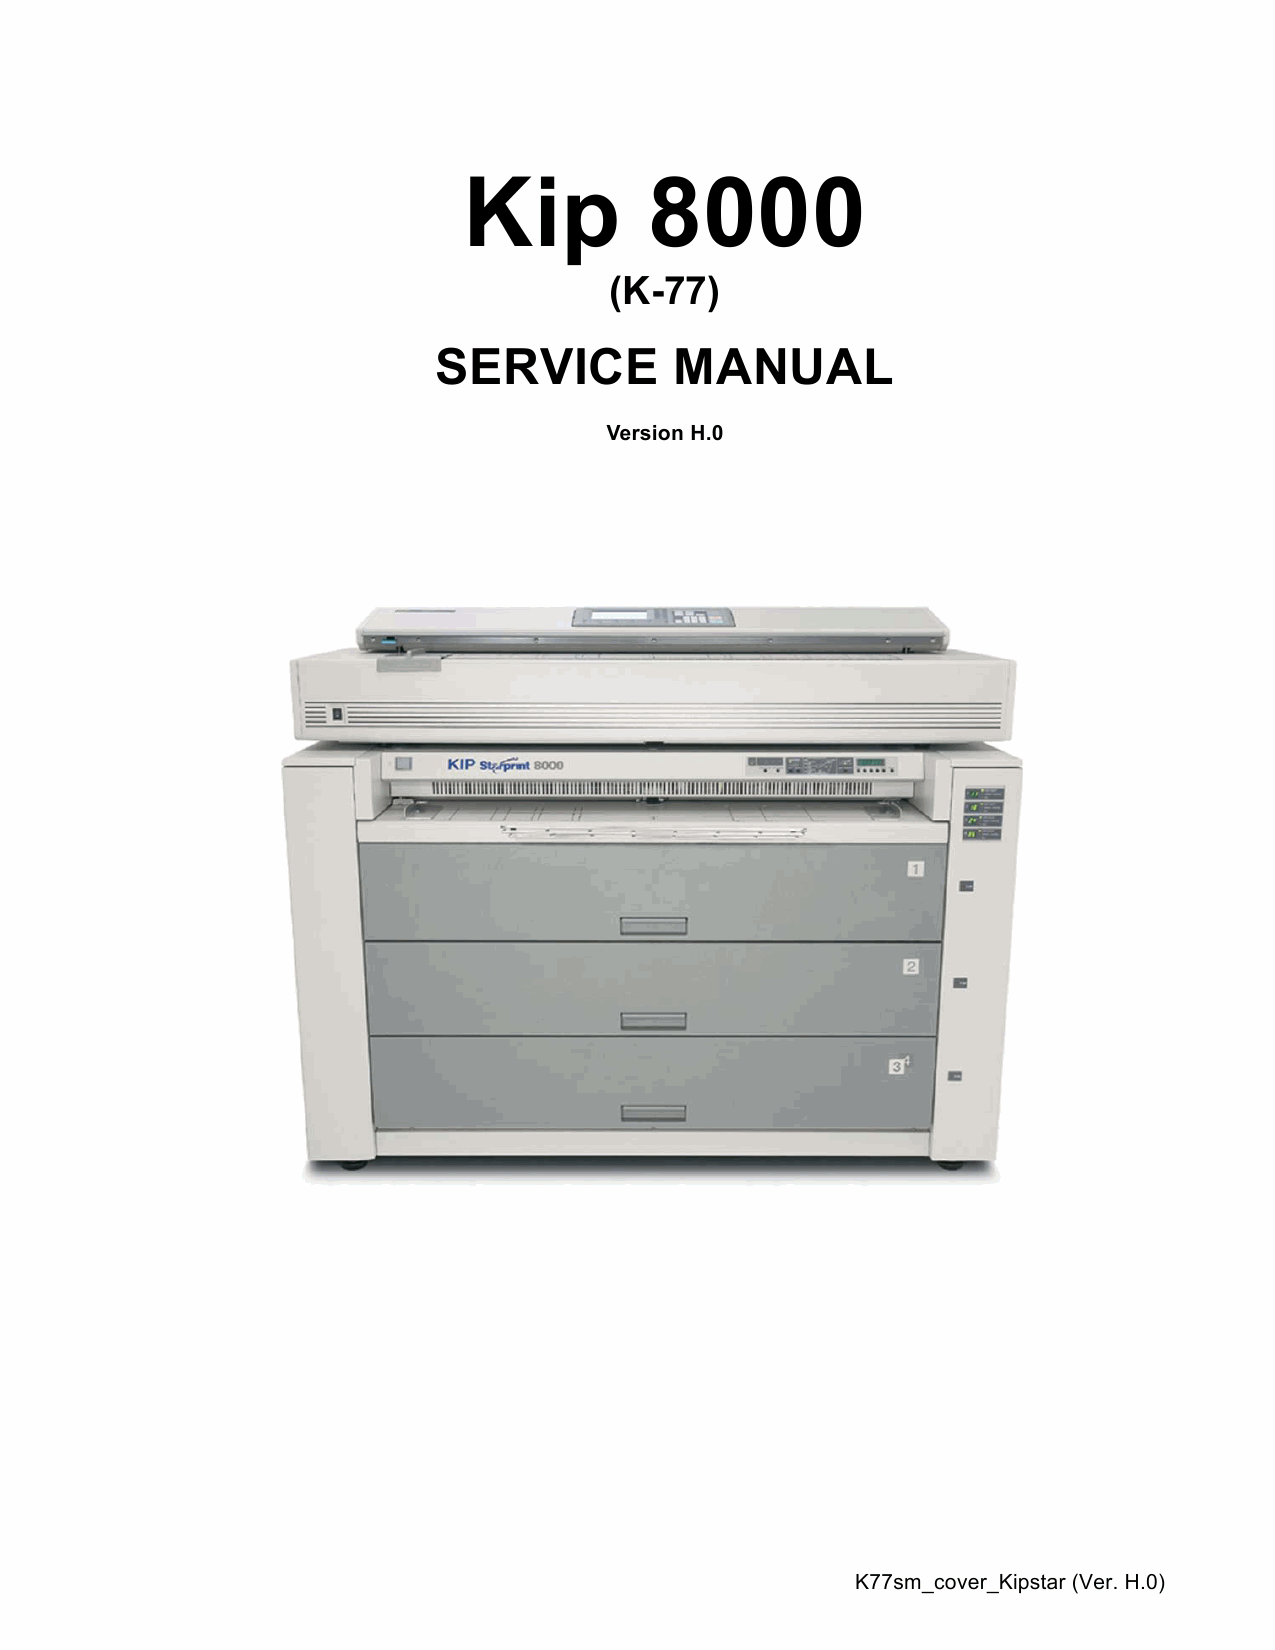 KIP 8000 K-77 Service Manual-1